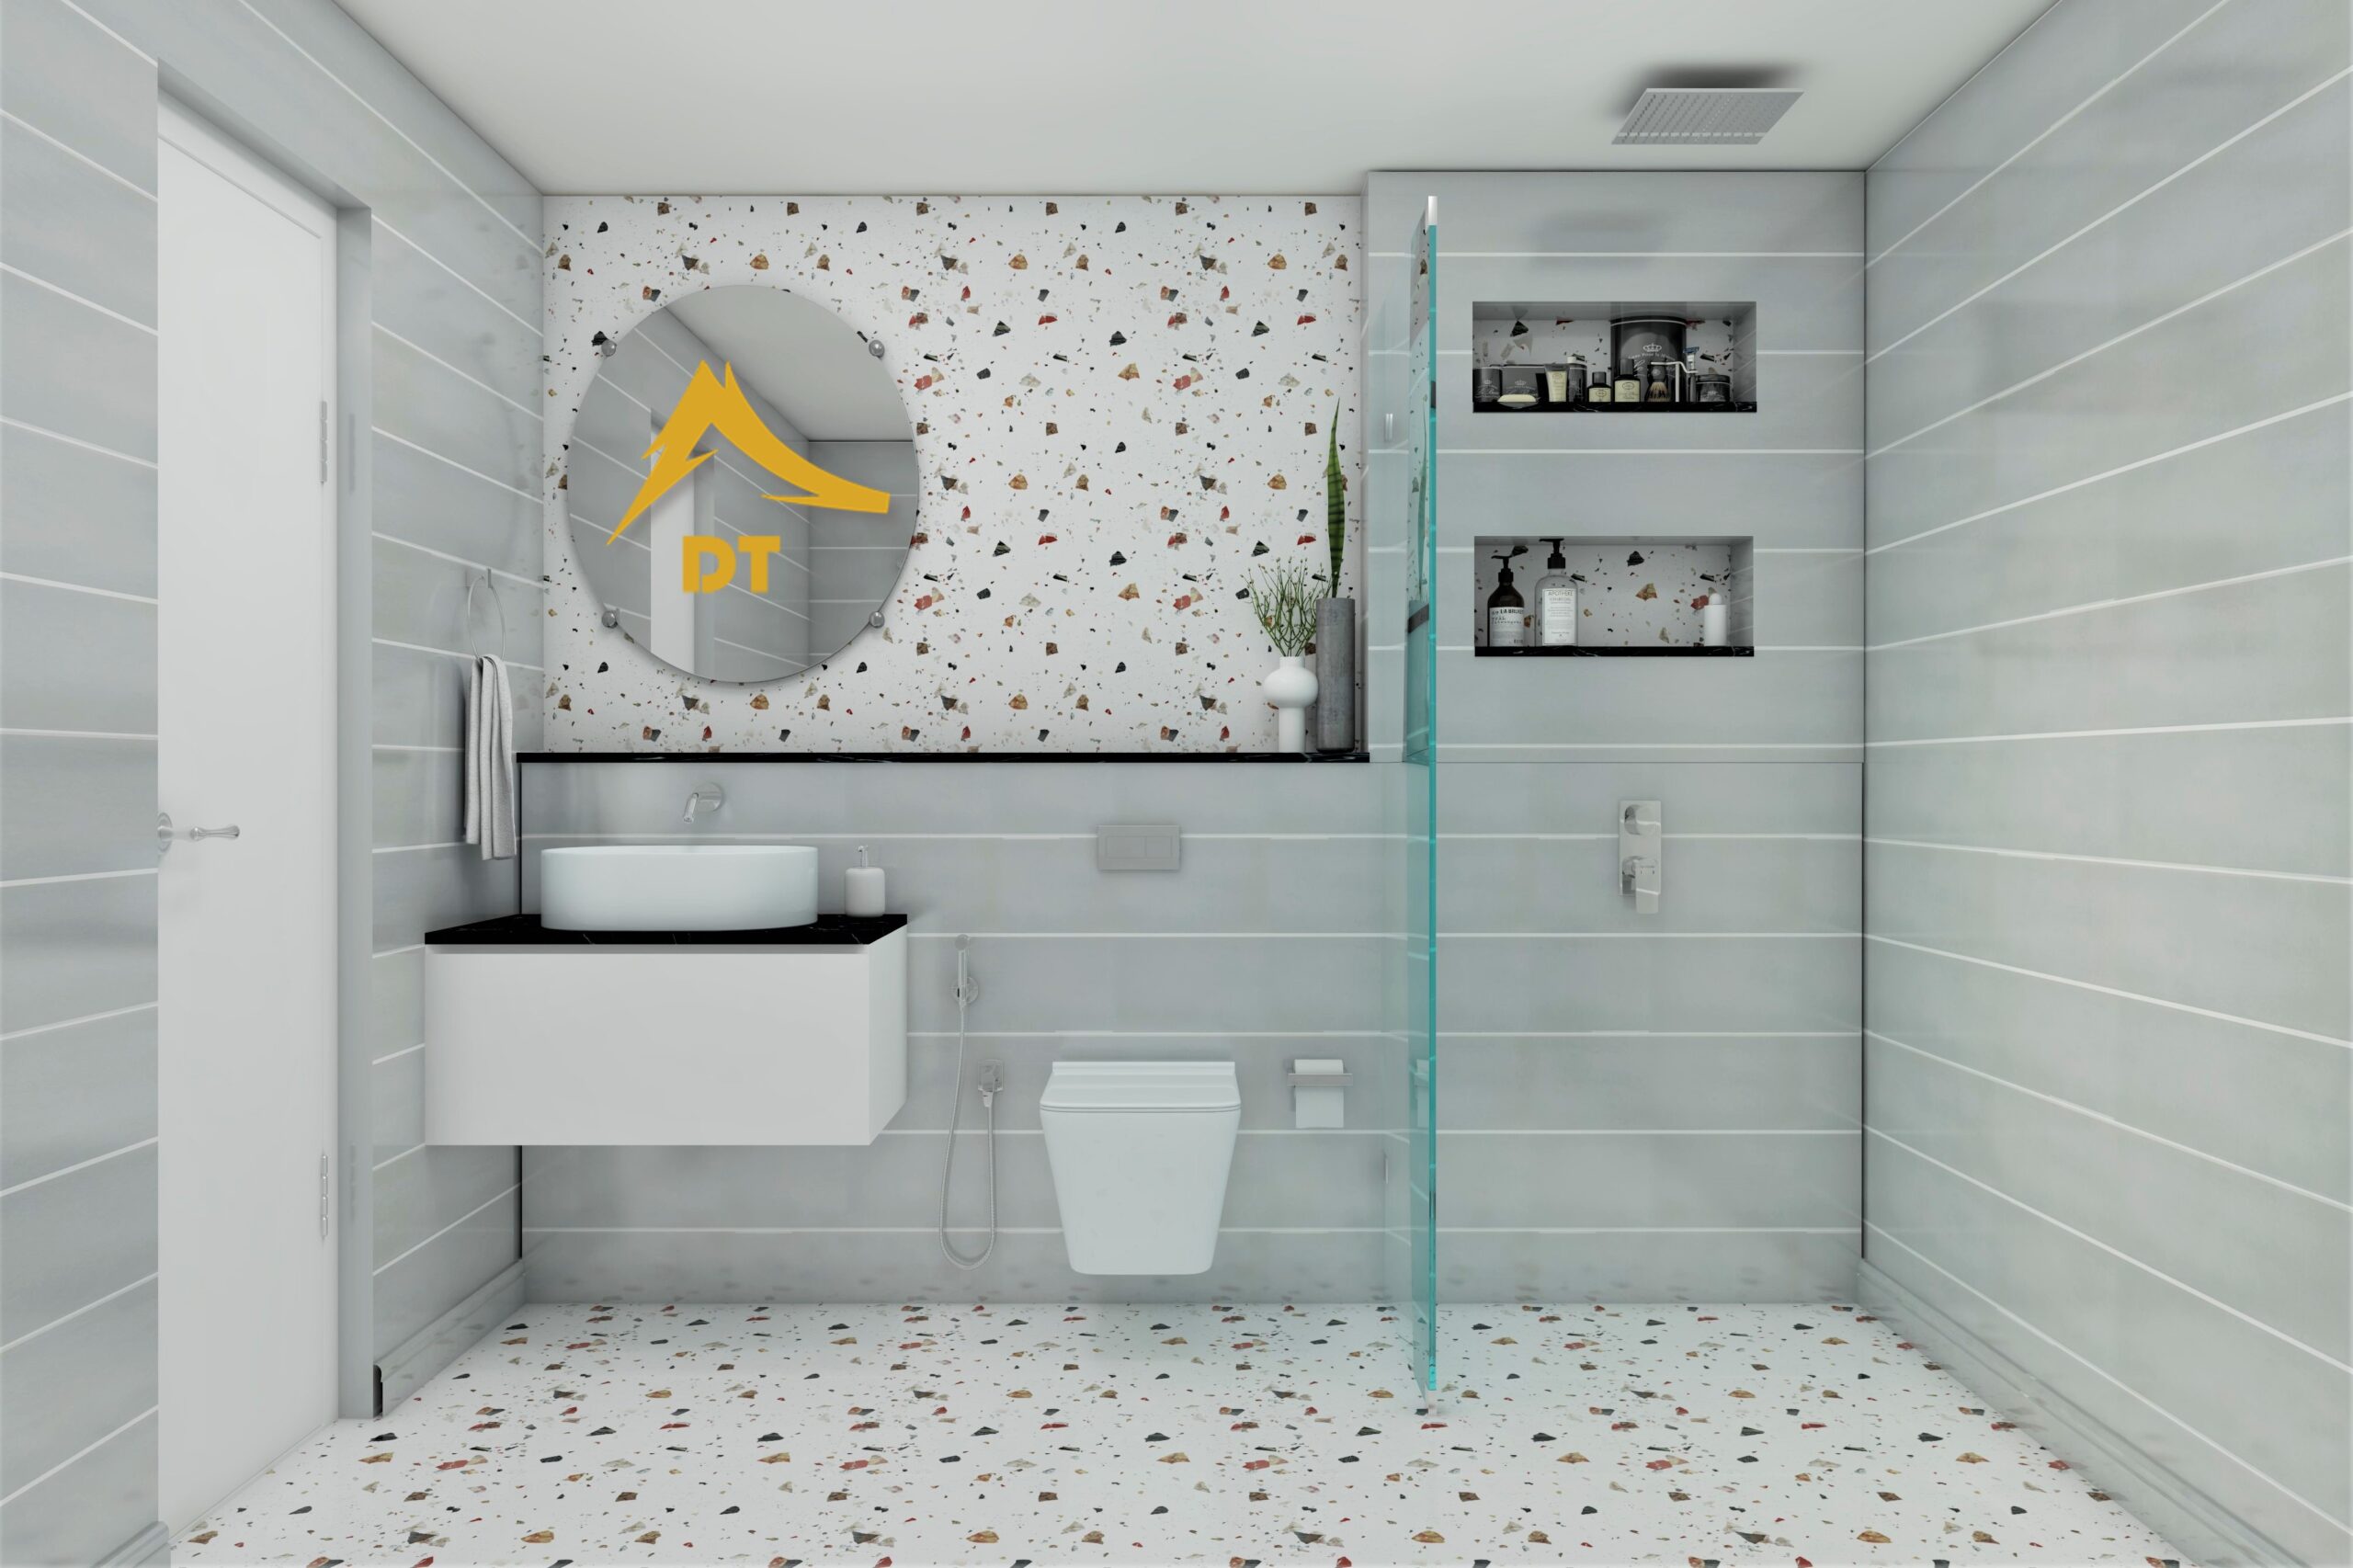 نکات طلایی دکوراسیون حمام کوچک | شرکت معماری دکوطرح 09122460089